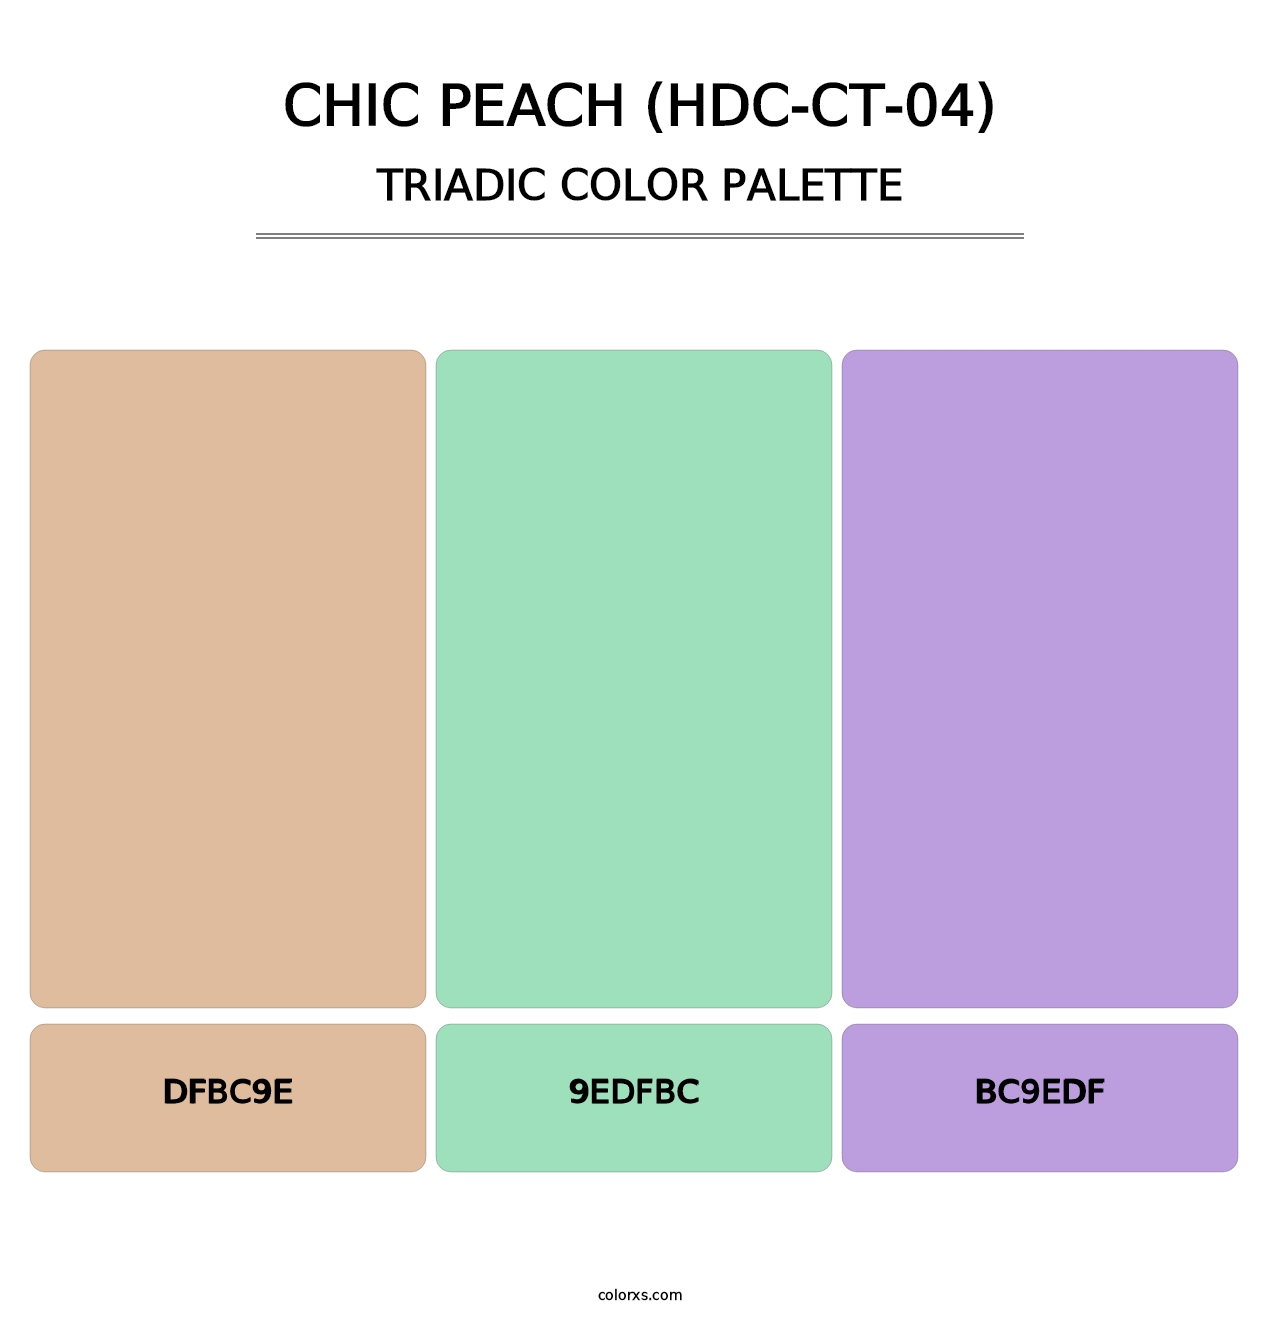 Chic Peach (HDC-CT-04) - Triadic Color Palette